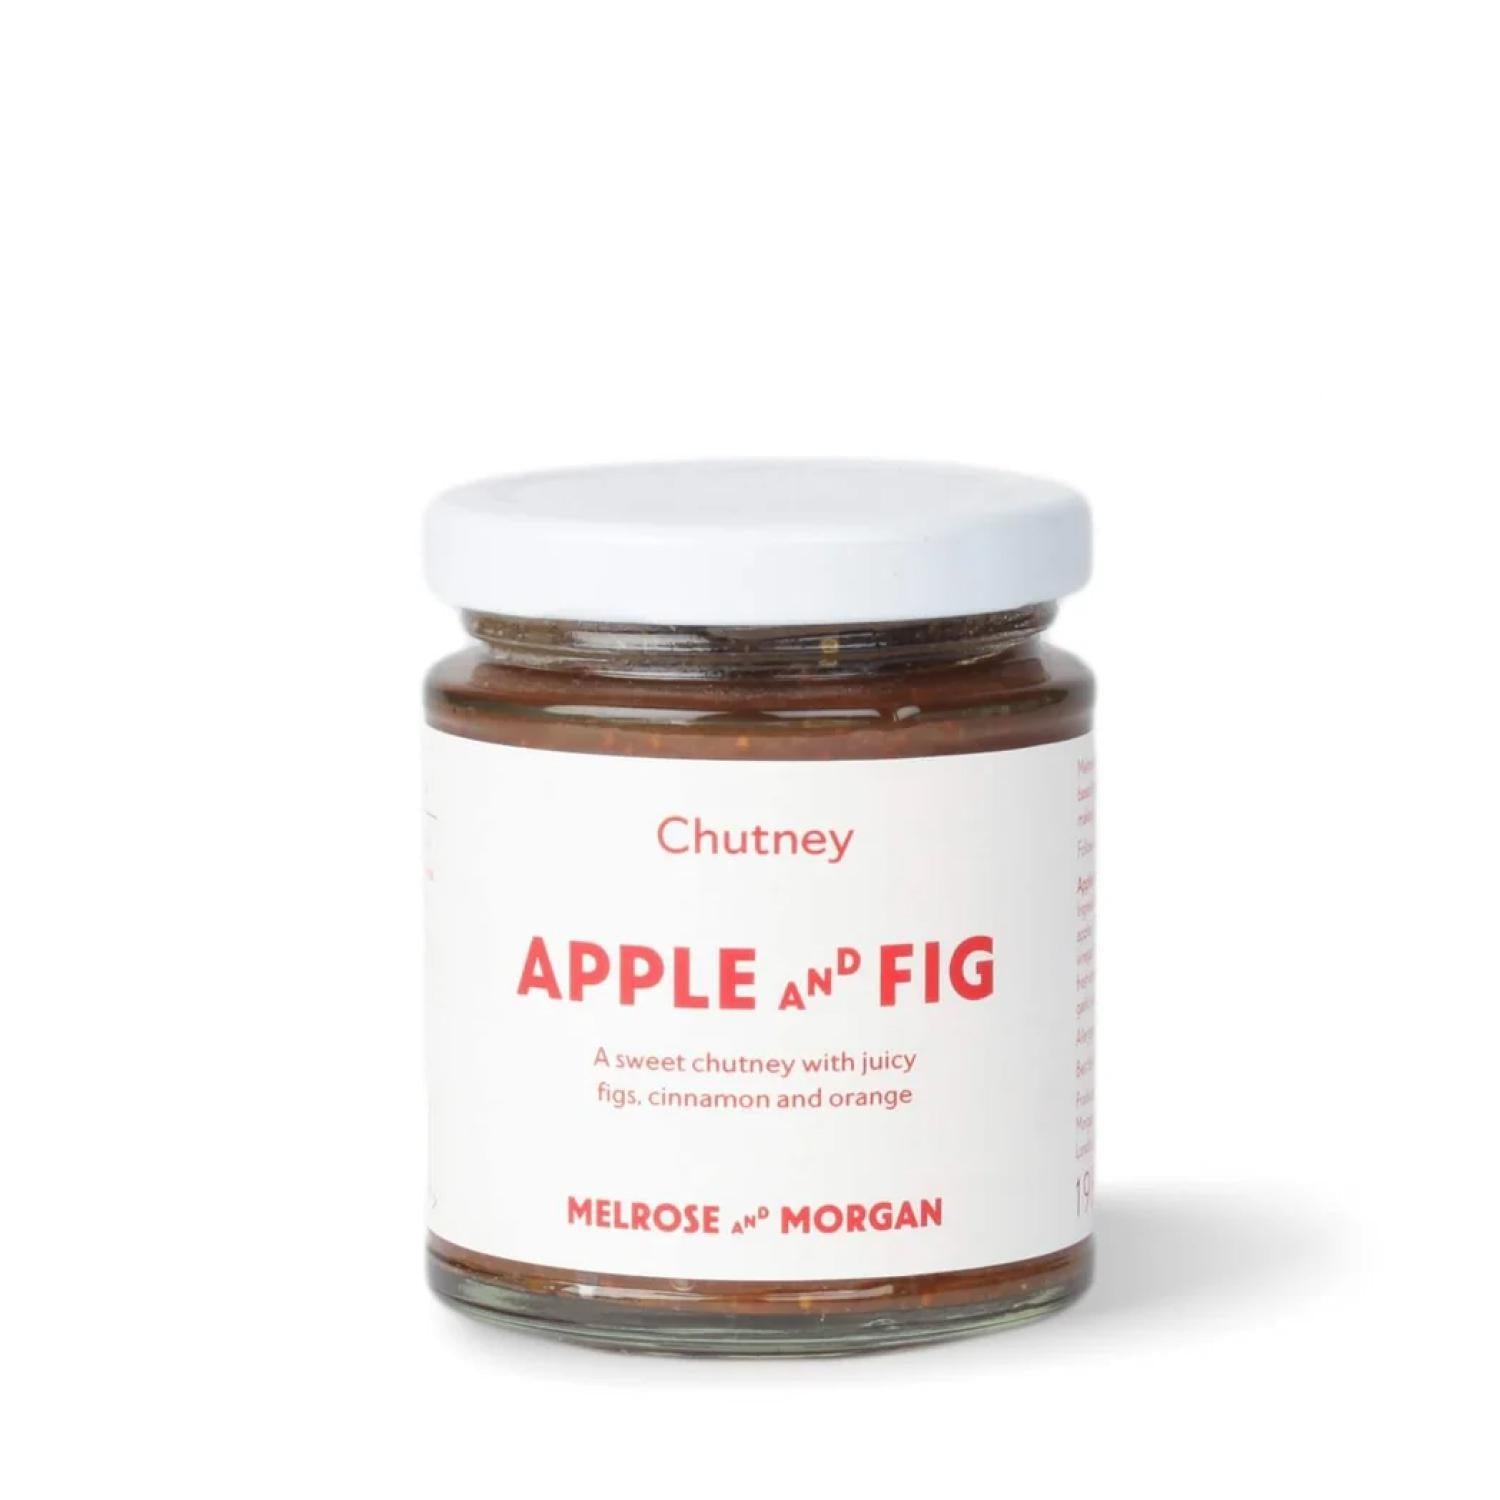 Melrose & Morgan - Apple & Fig Chutney